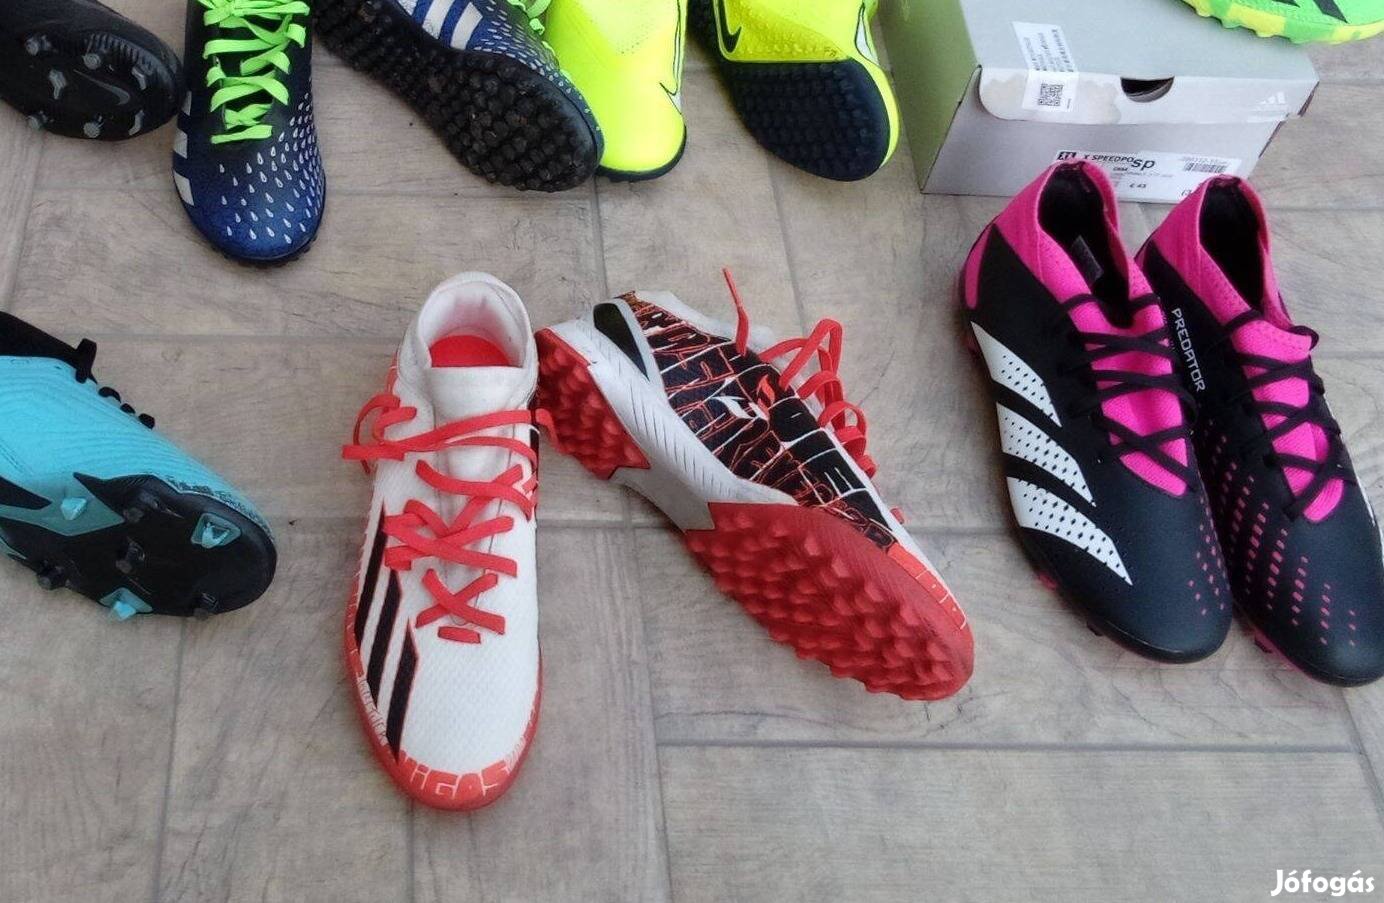 Újszerű stoplis focicipő futball foci cipő műfüves 38 2/3 Adidas